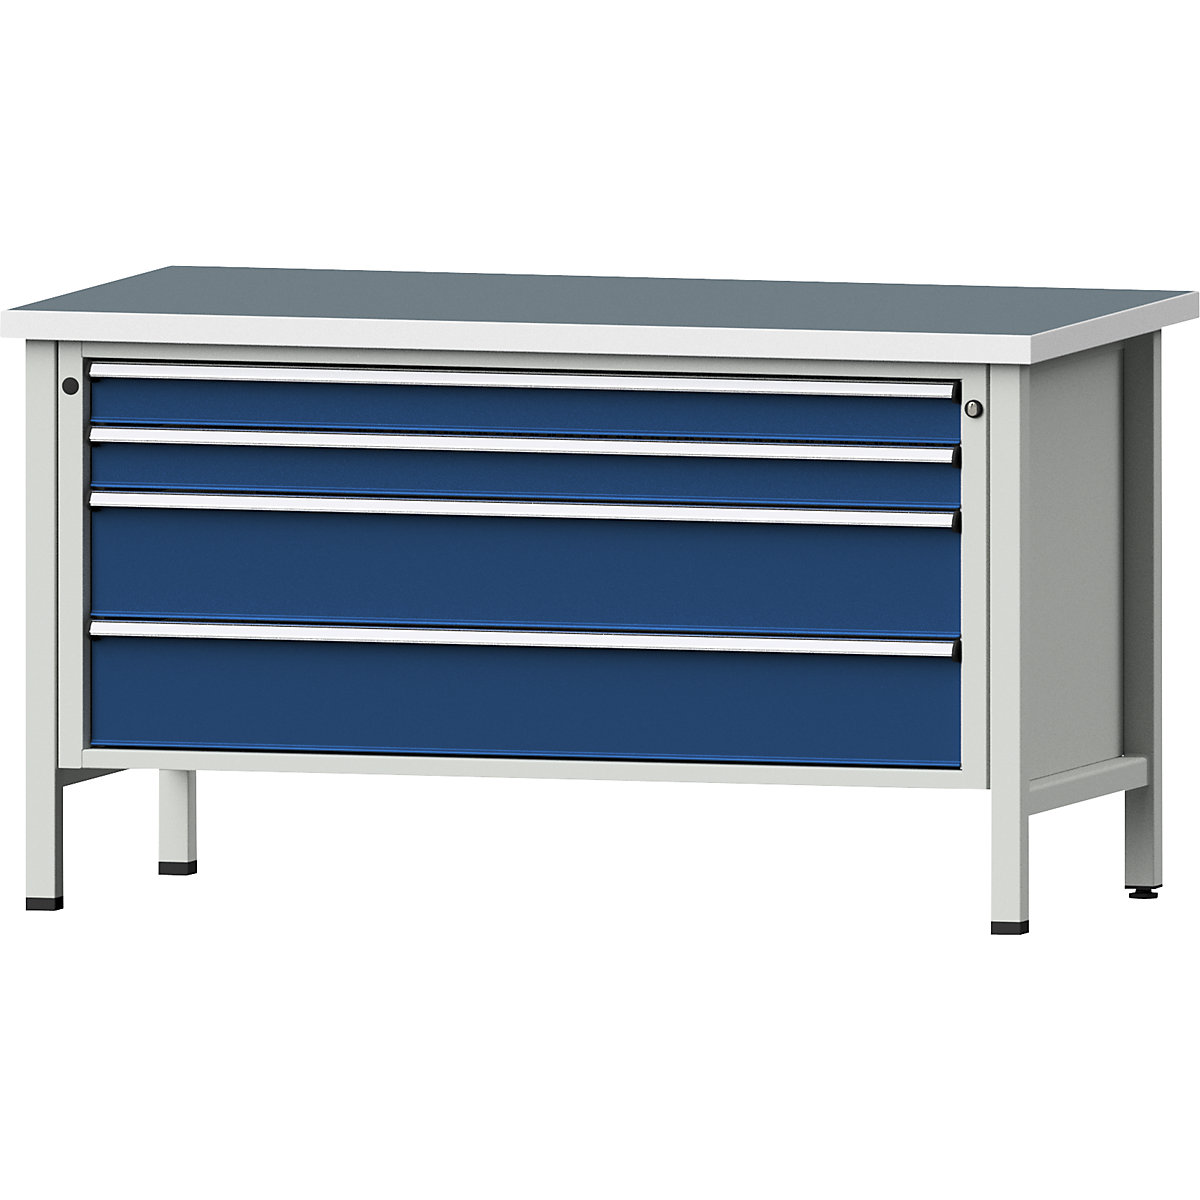 Établi avec tiroirs XL/XXL, sur piétement – ANKE, largeur 1500 mm, 4 tiroirs, plateau universel, façade bleu gentiane-10